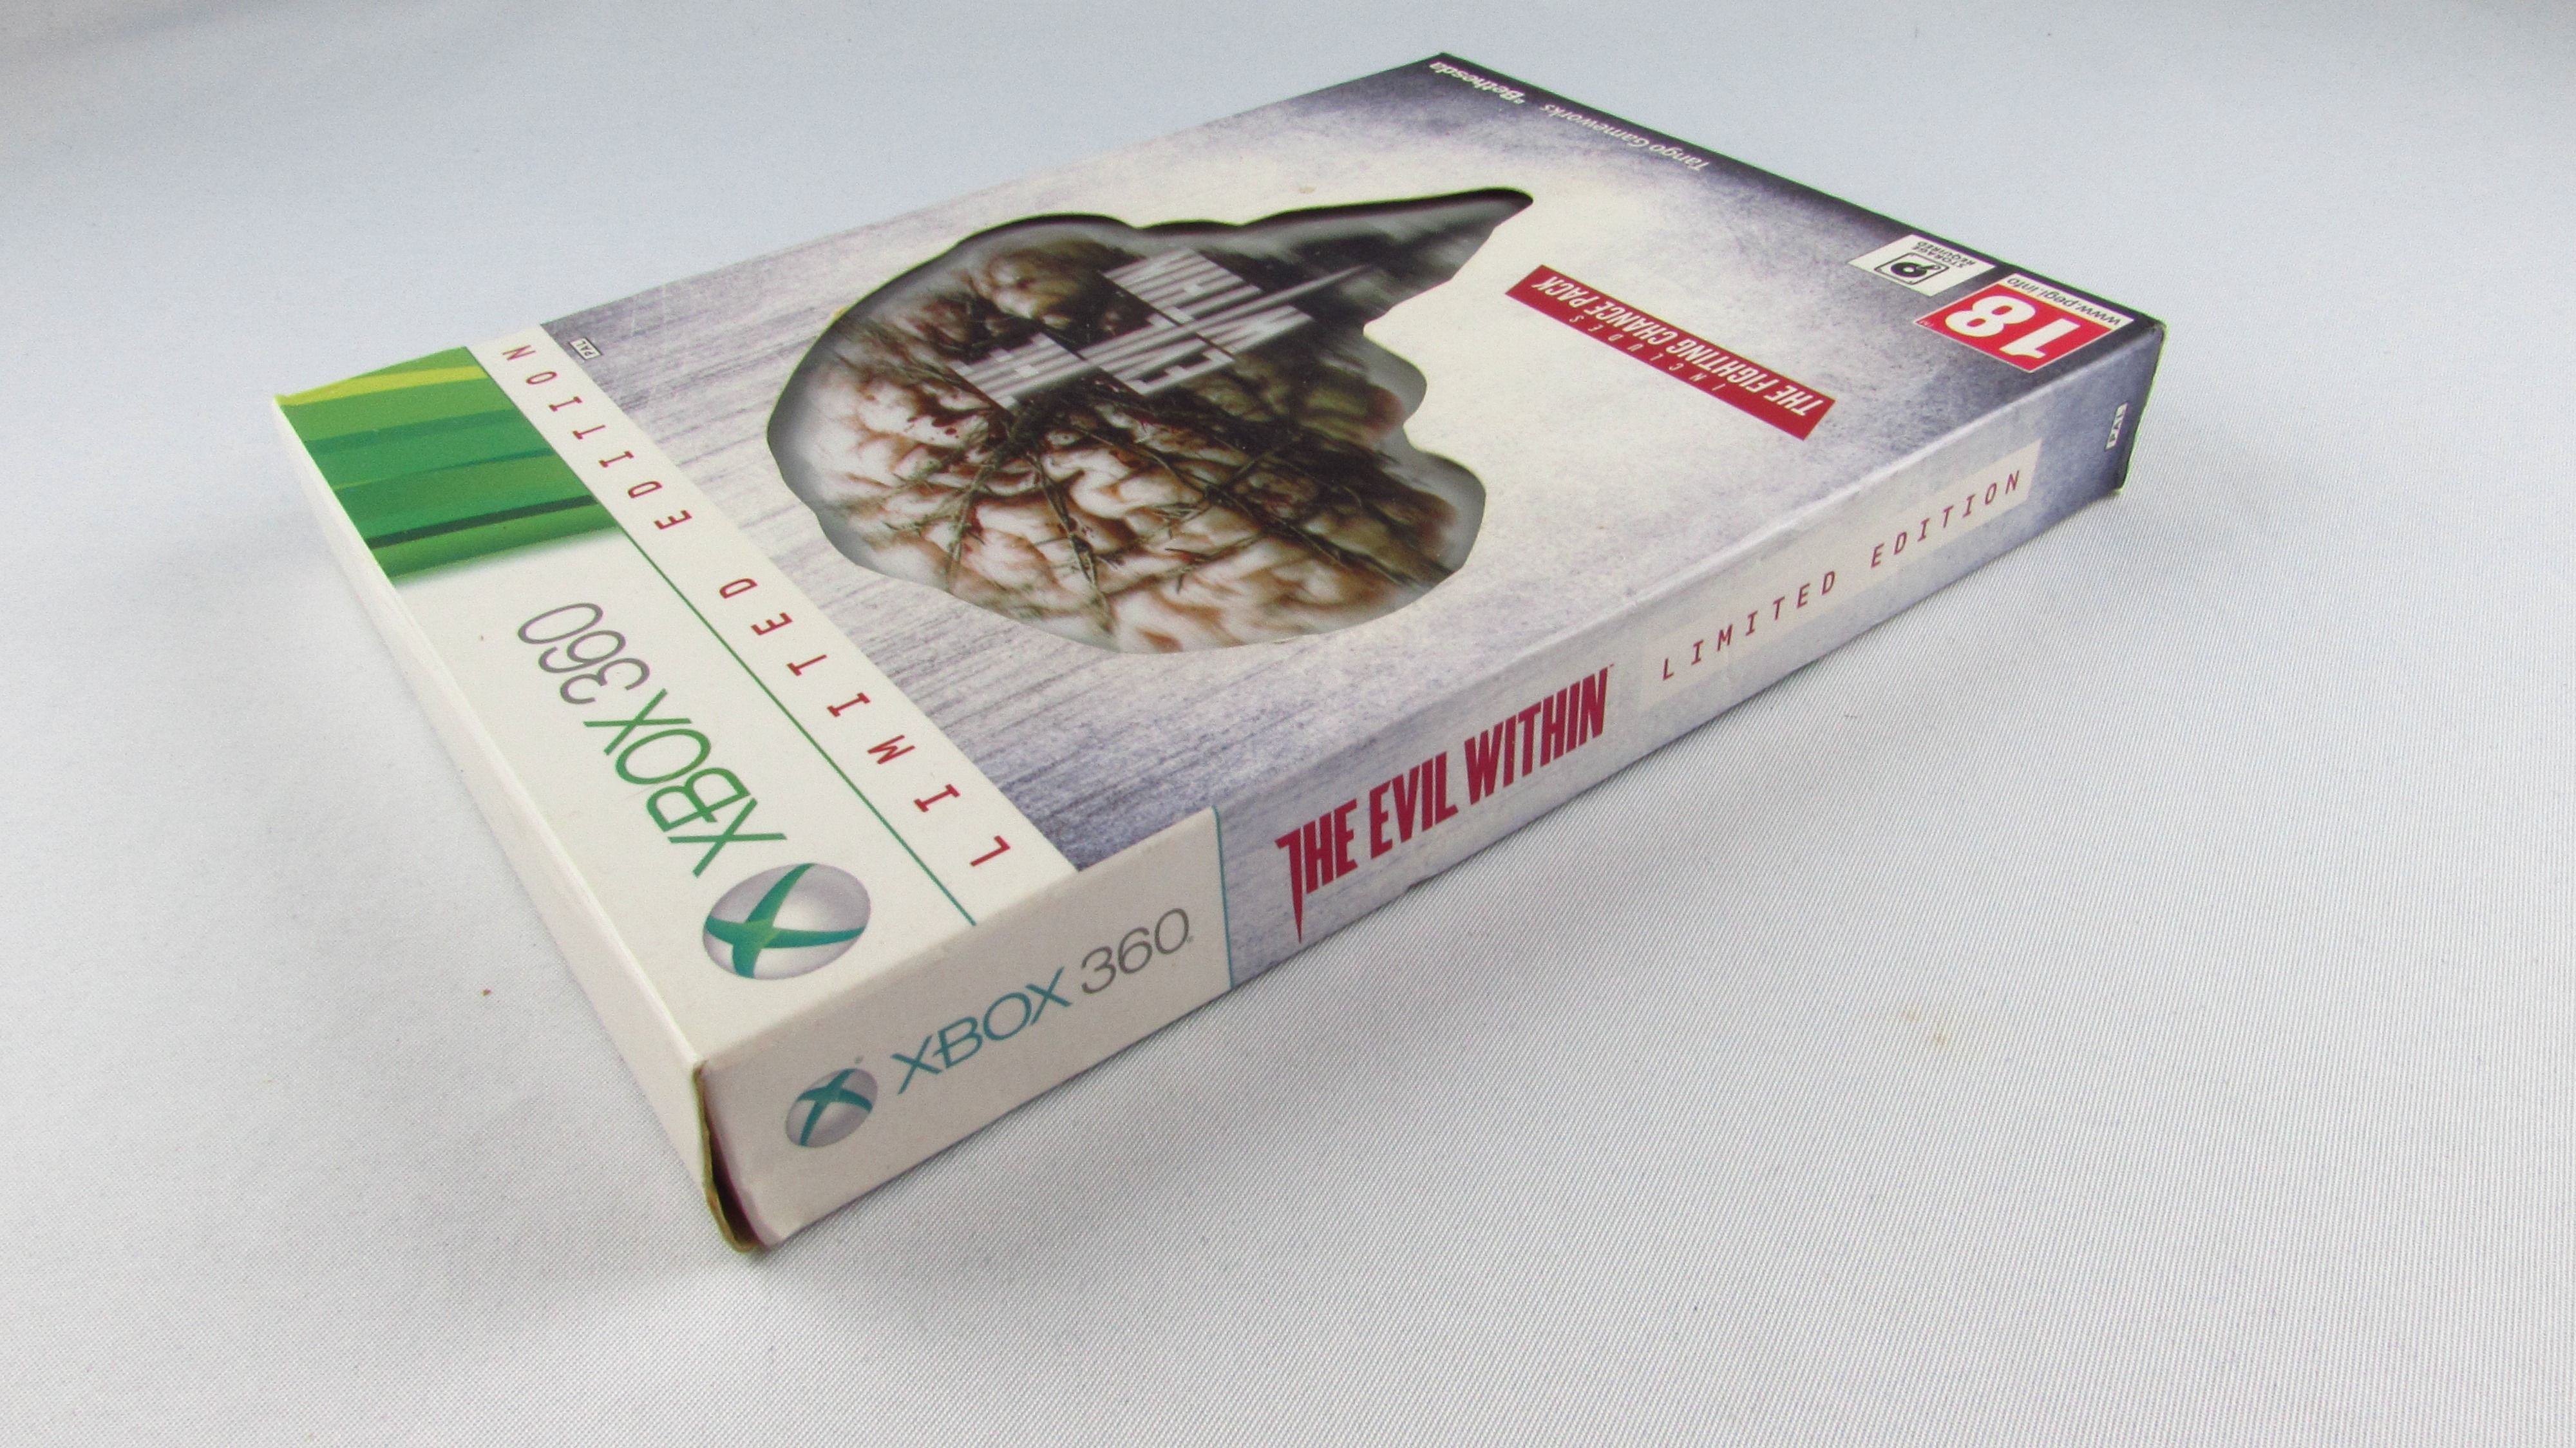 XBOX 360 - The Evili Within Limited Edition - Gra na konsolę